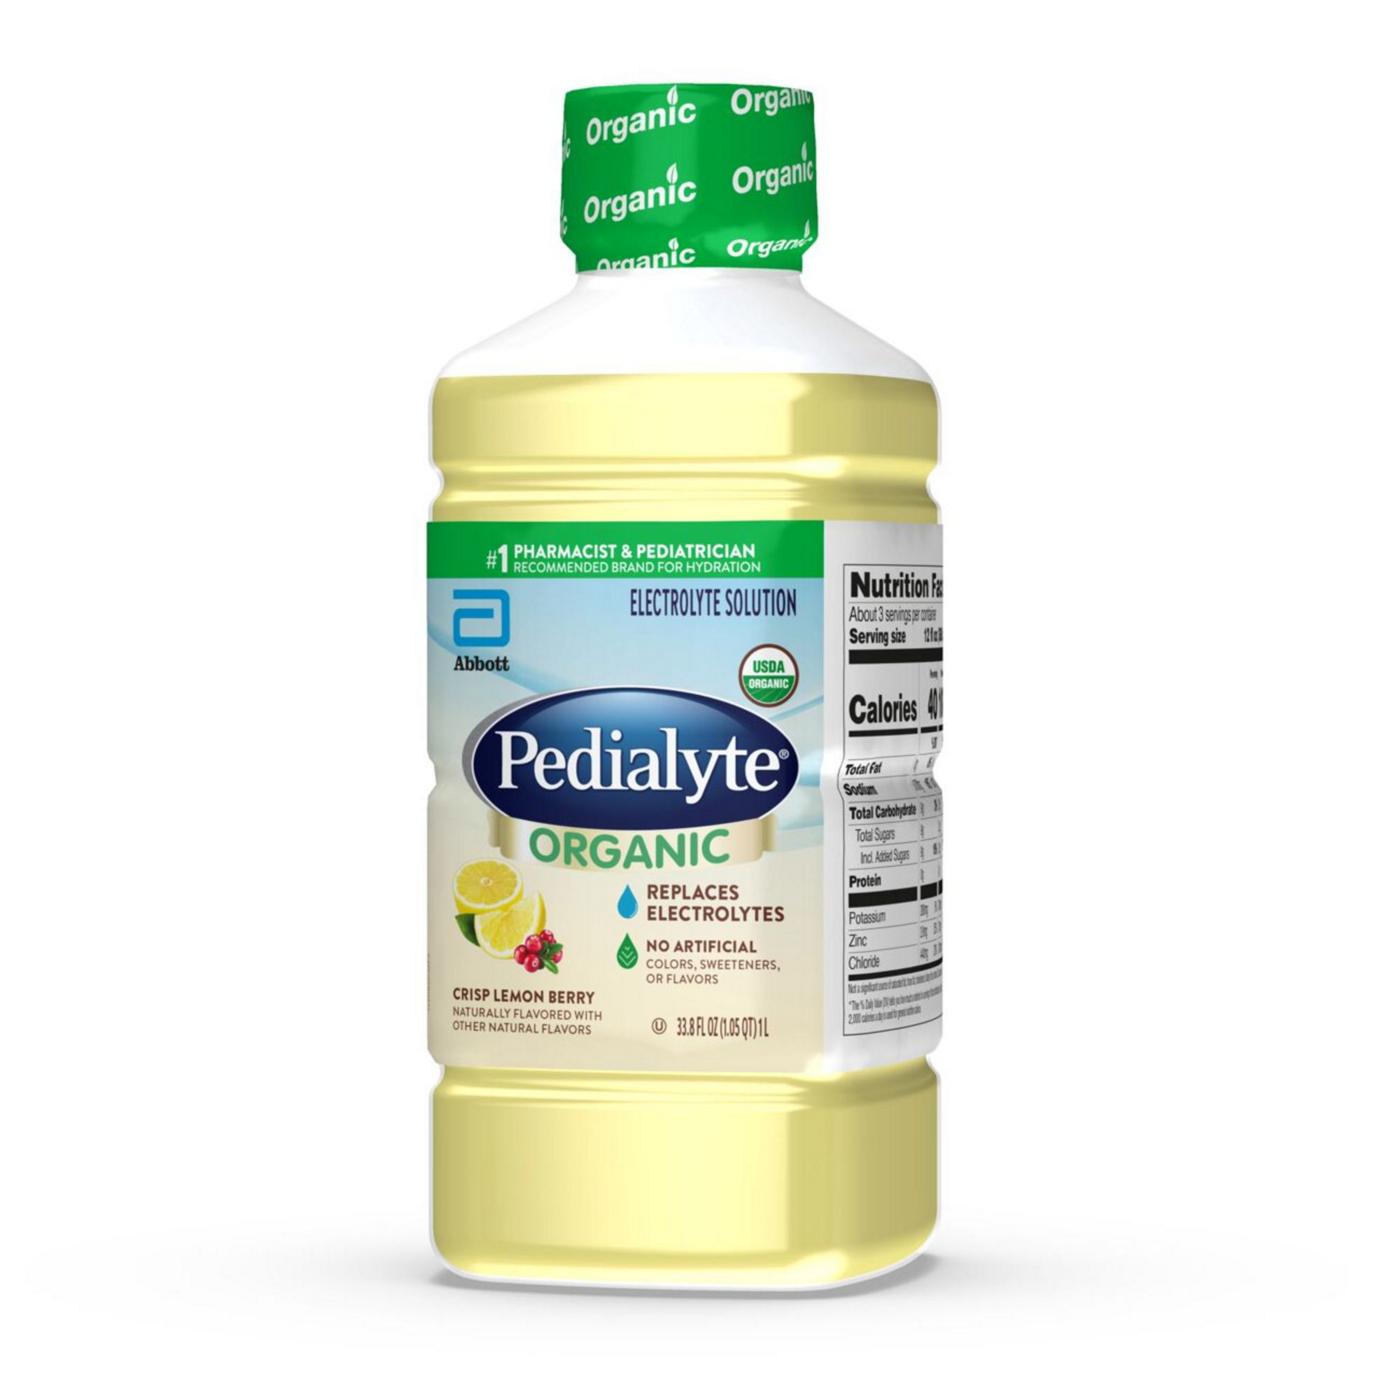 Pedialyte Organic Electrolyte Solution - Crisp Lemon Berry; image 9 of 9